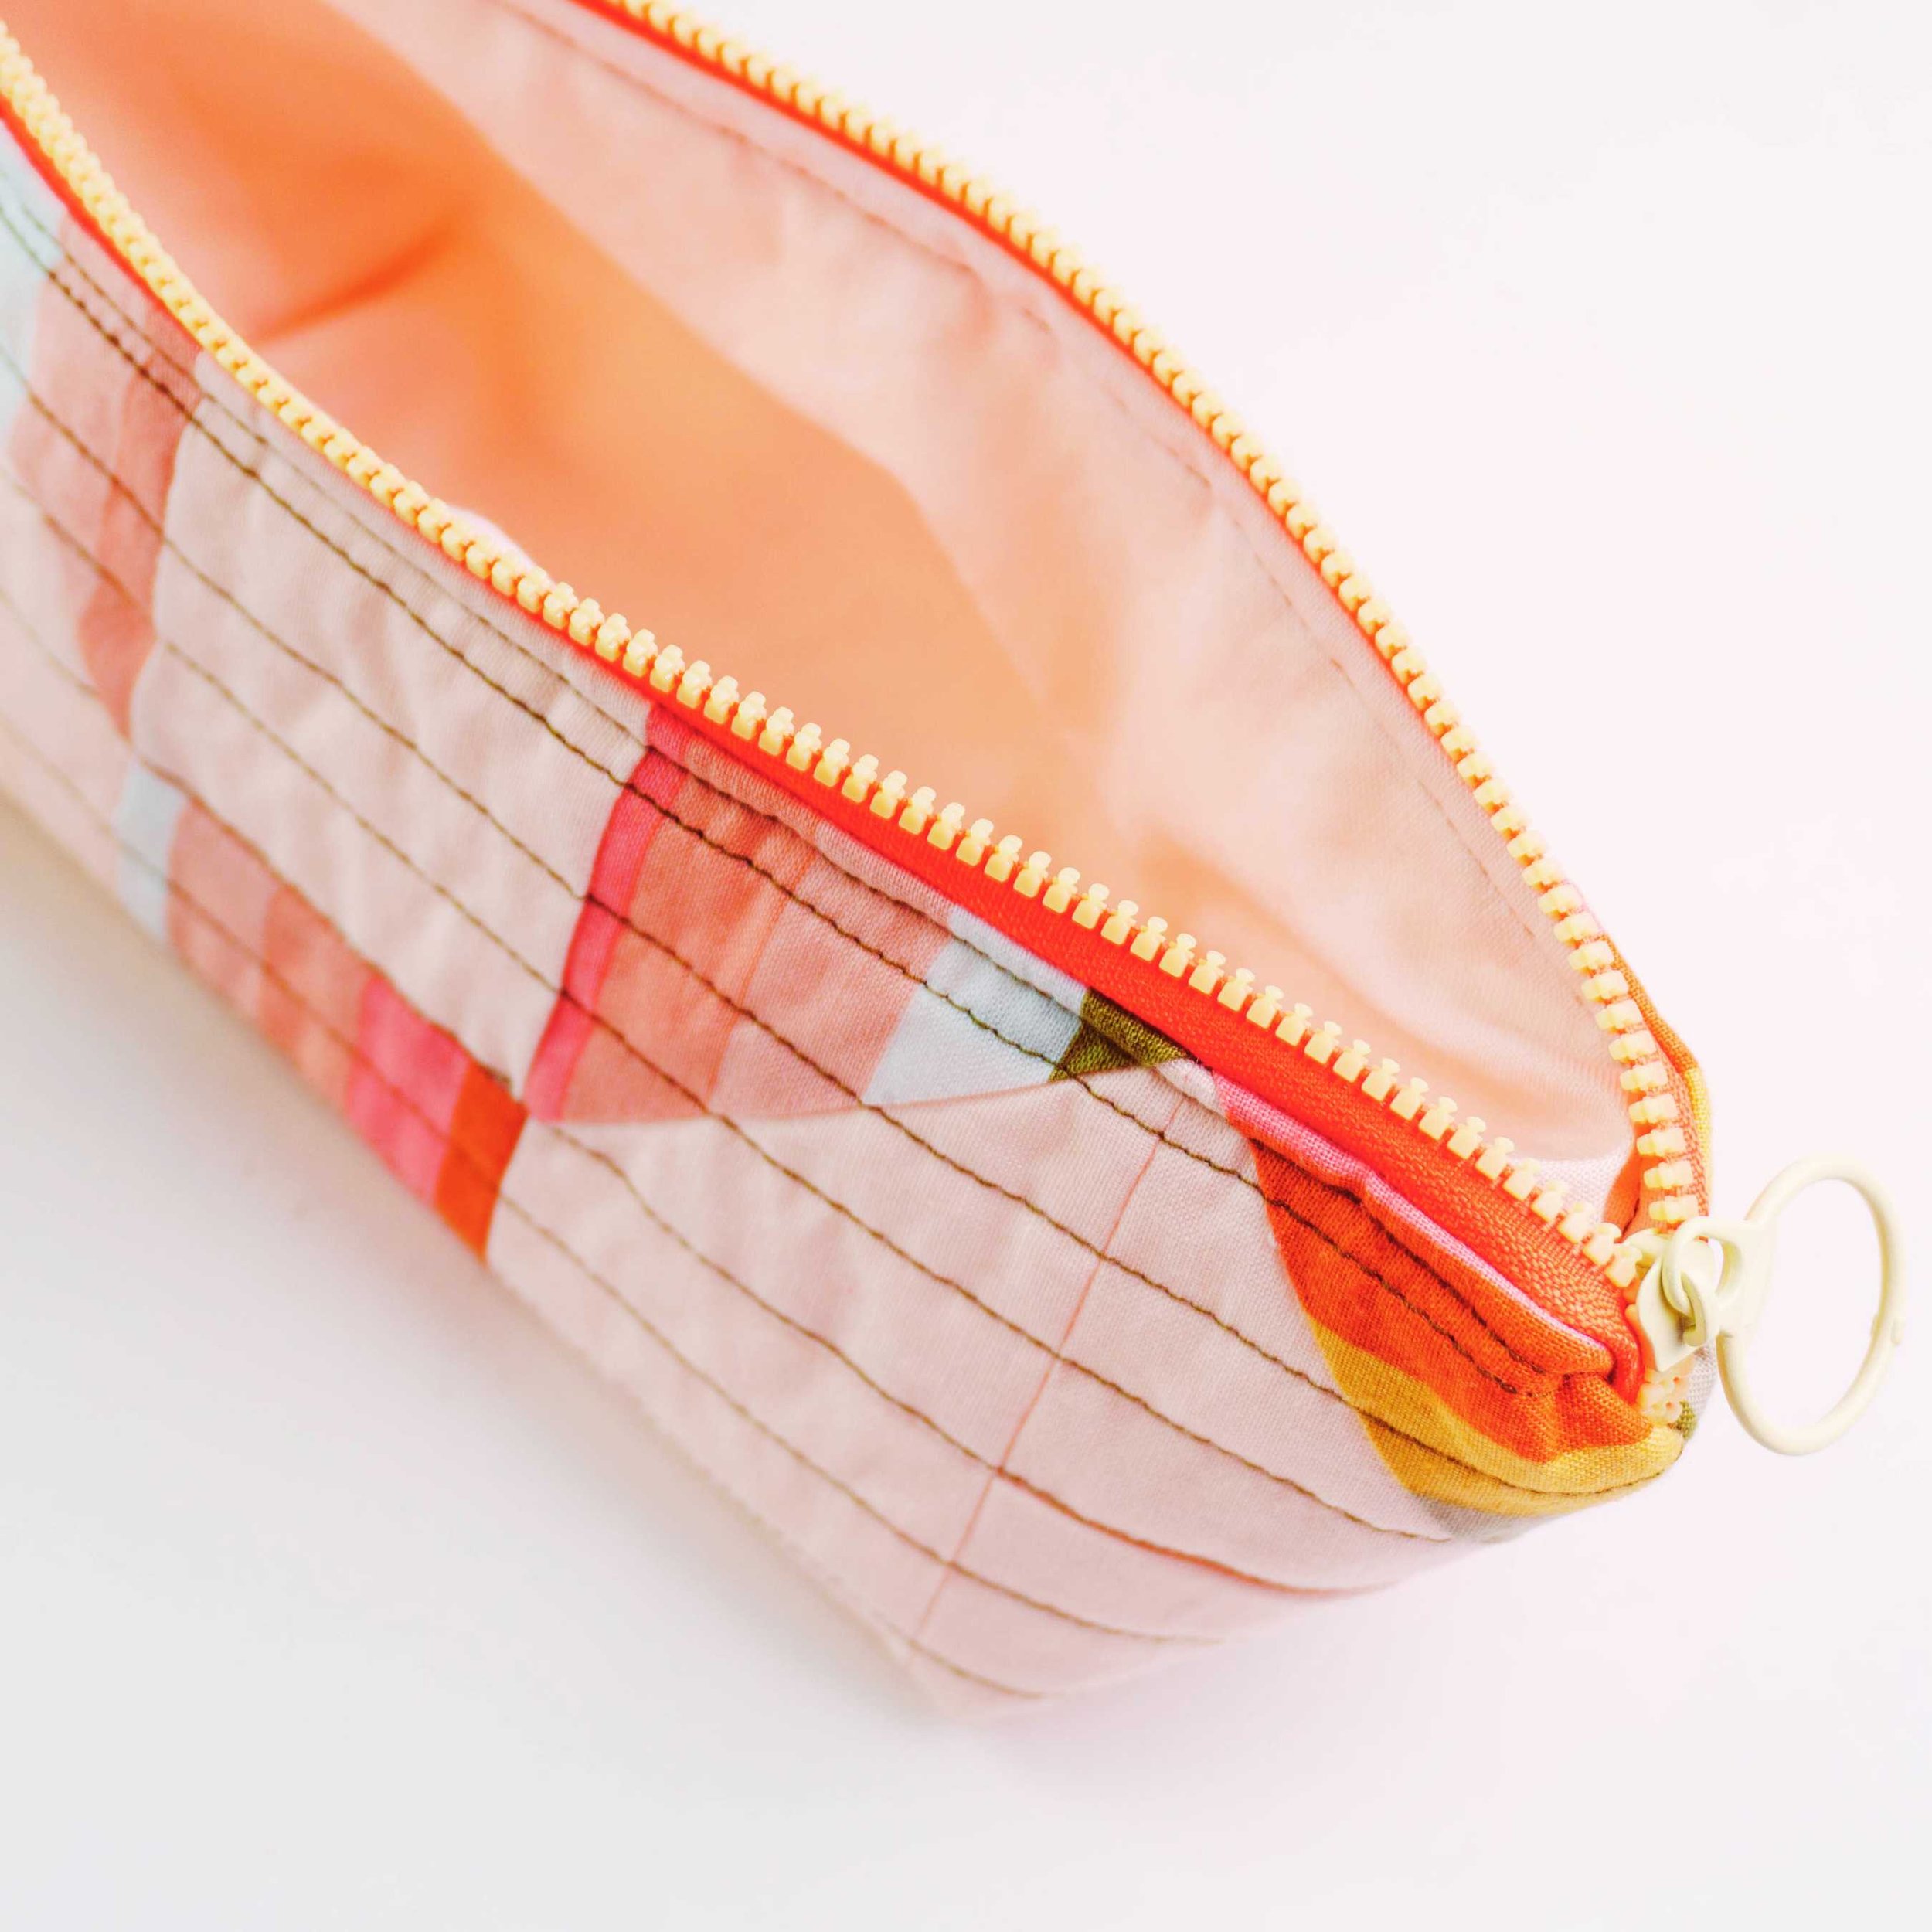 Zipper Tips for Bag-Making - Sew Sweetness